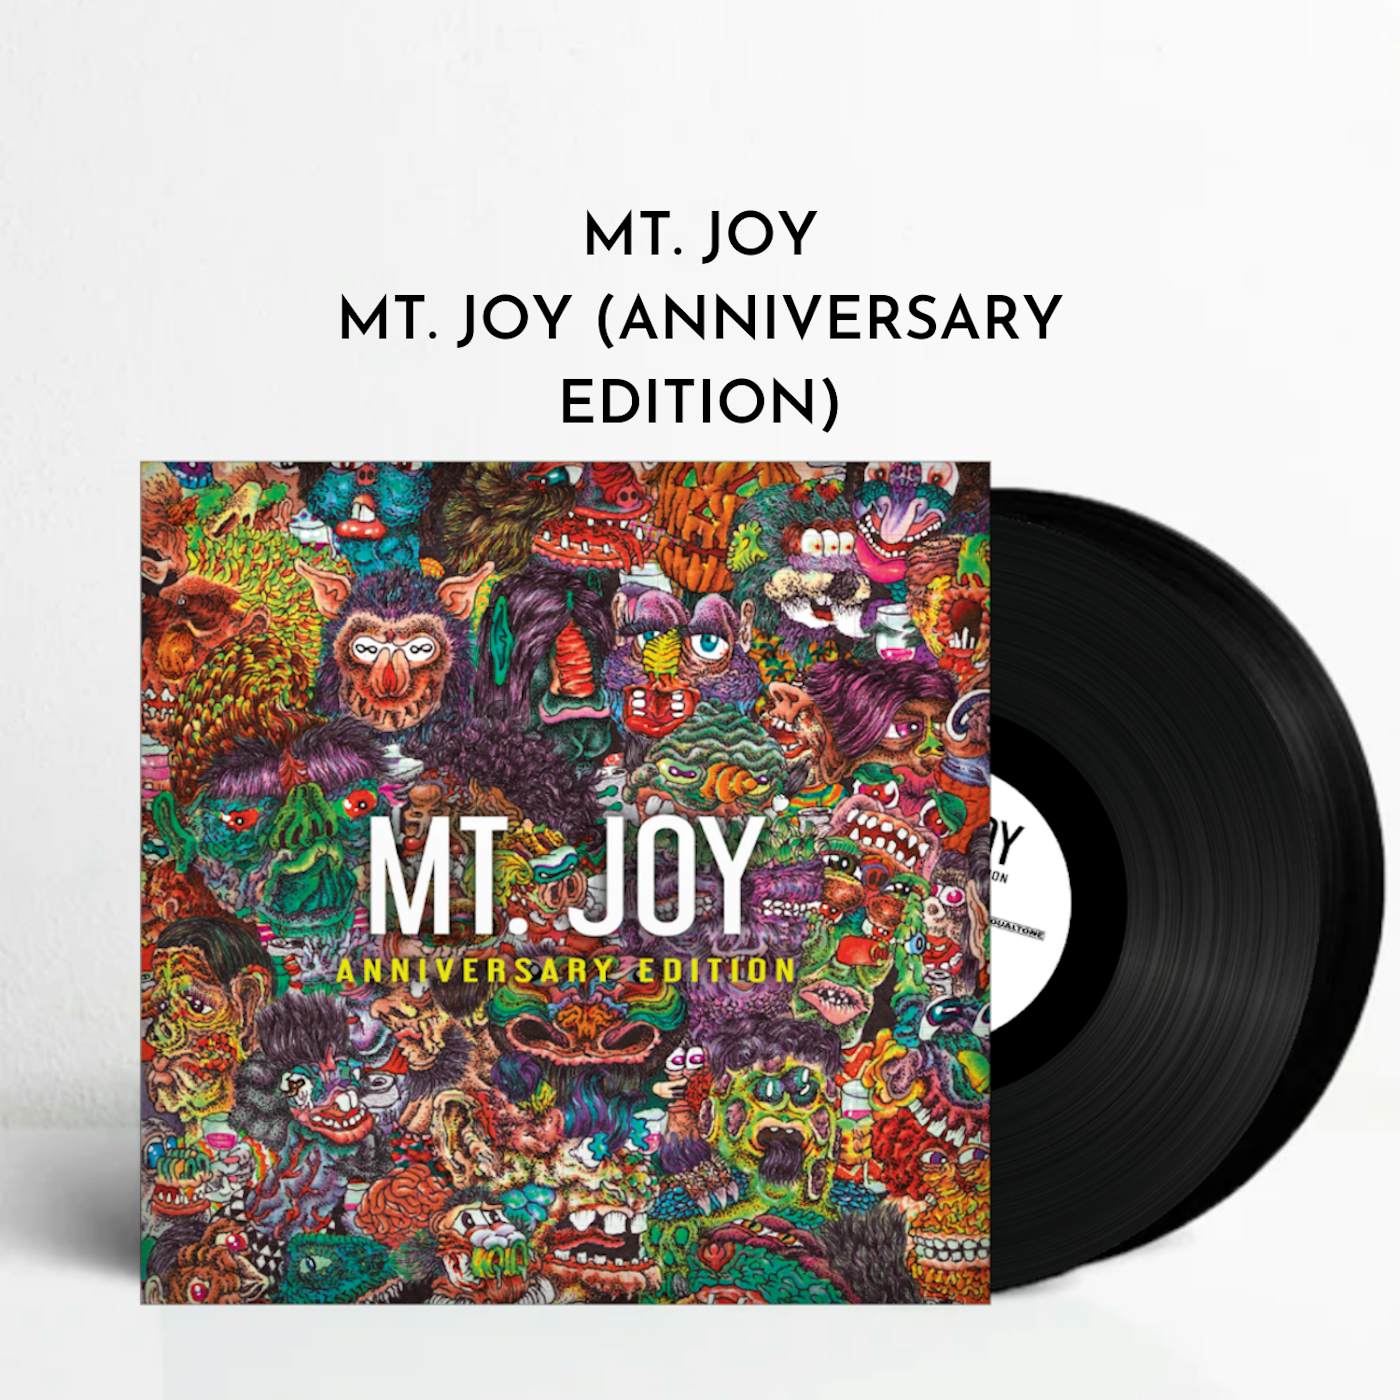 Mt. Joy (Anniversary Edition Vinyl)